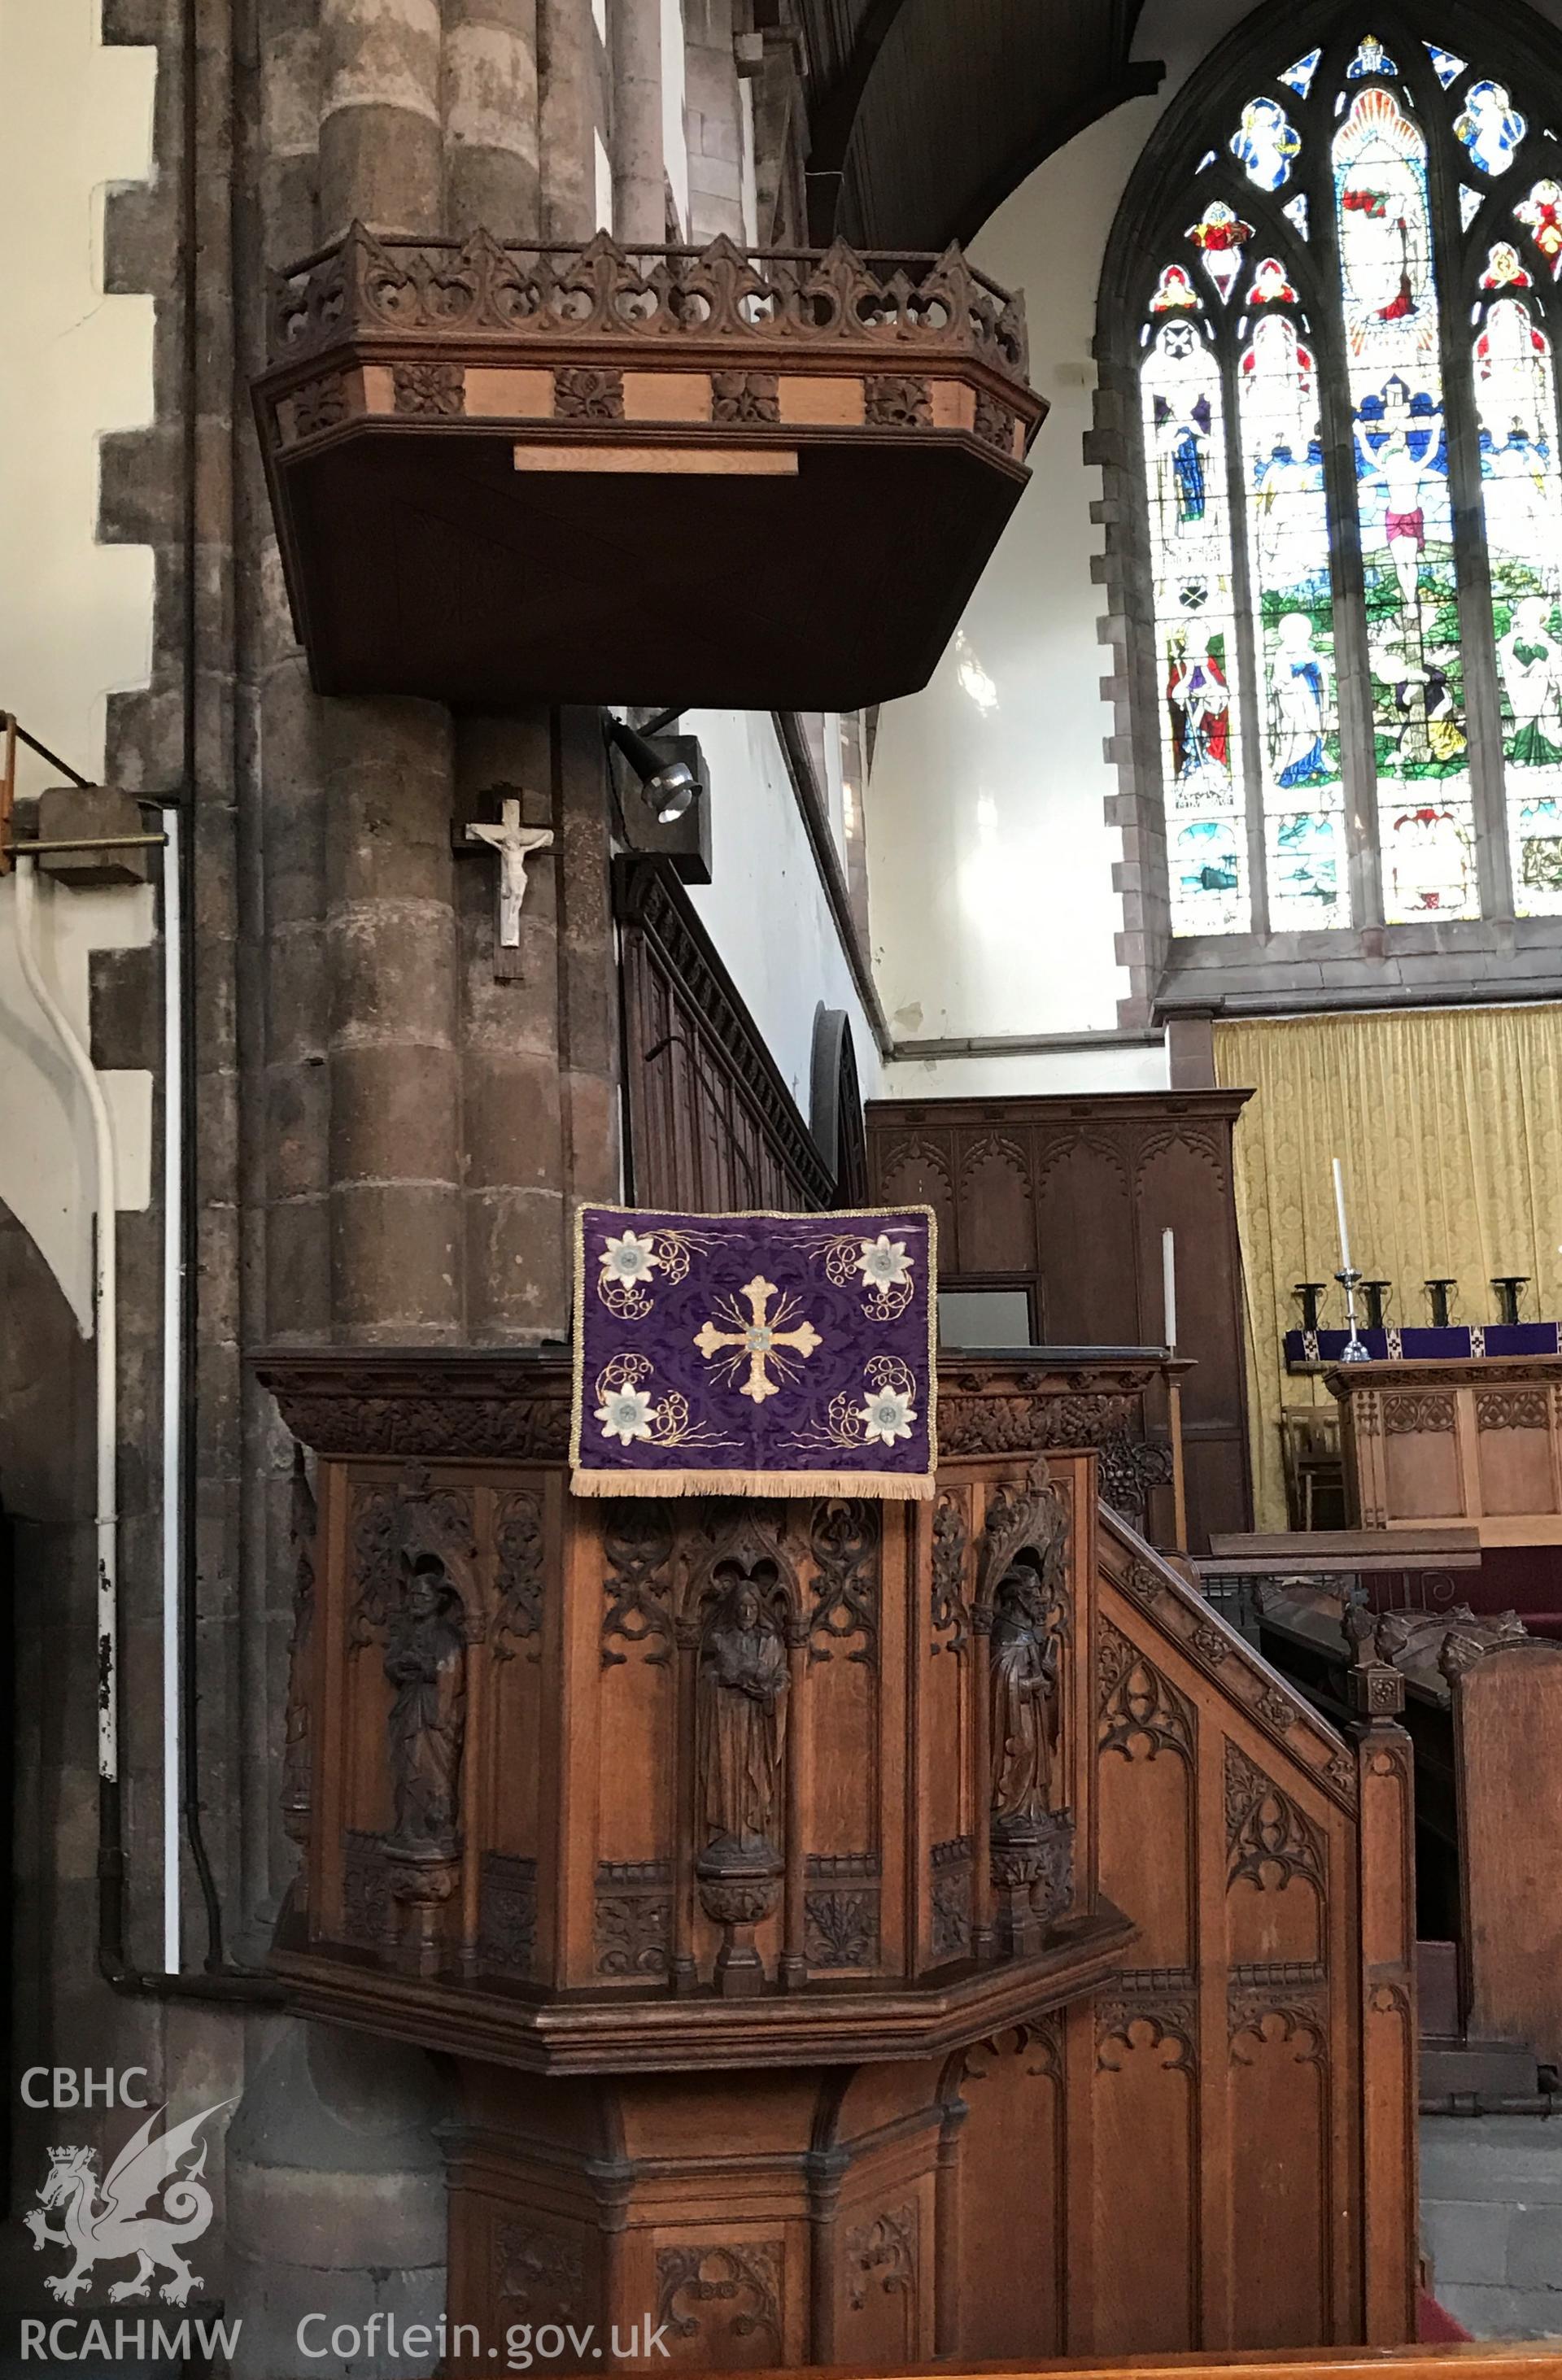 Colour photo showing the pulpit at St Paul's Church, Grangetown, taken by Revd David T. Morris, 2018.